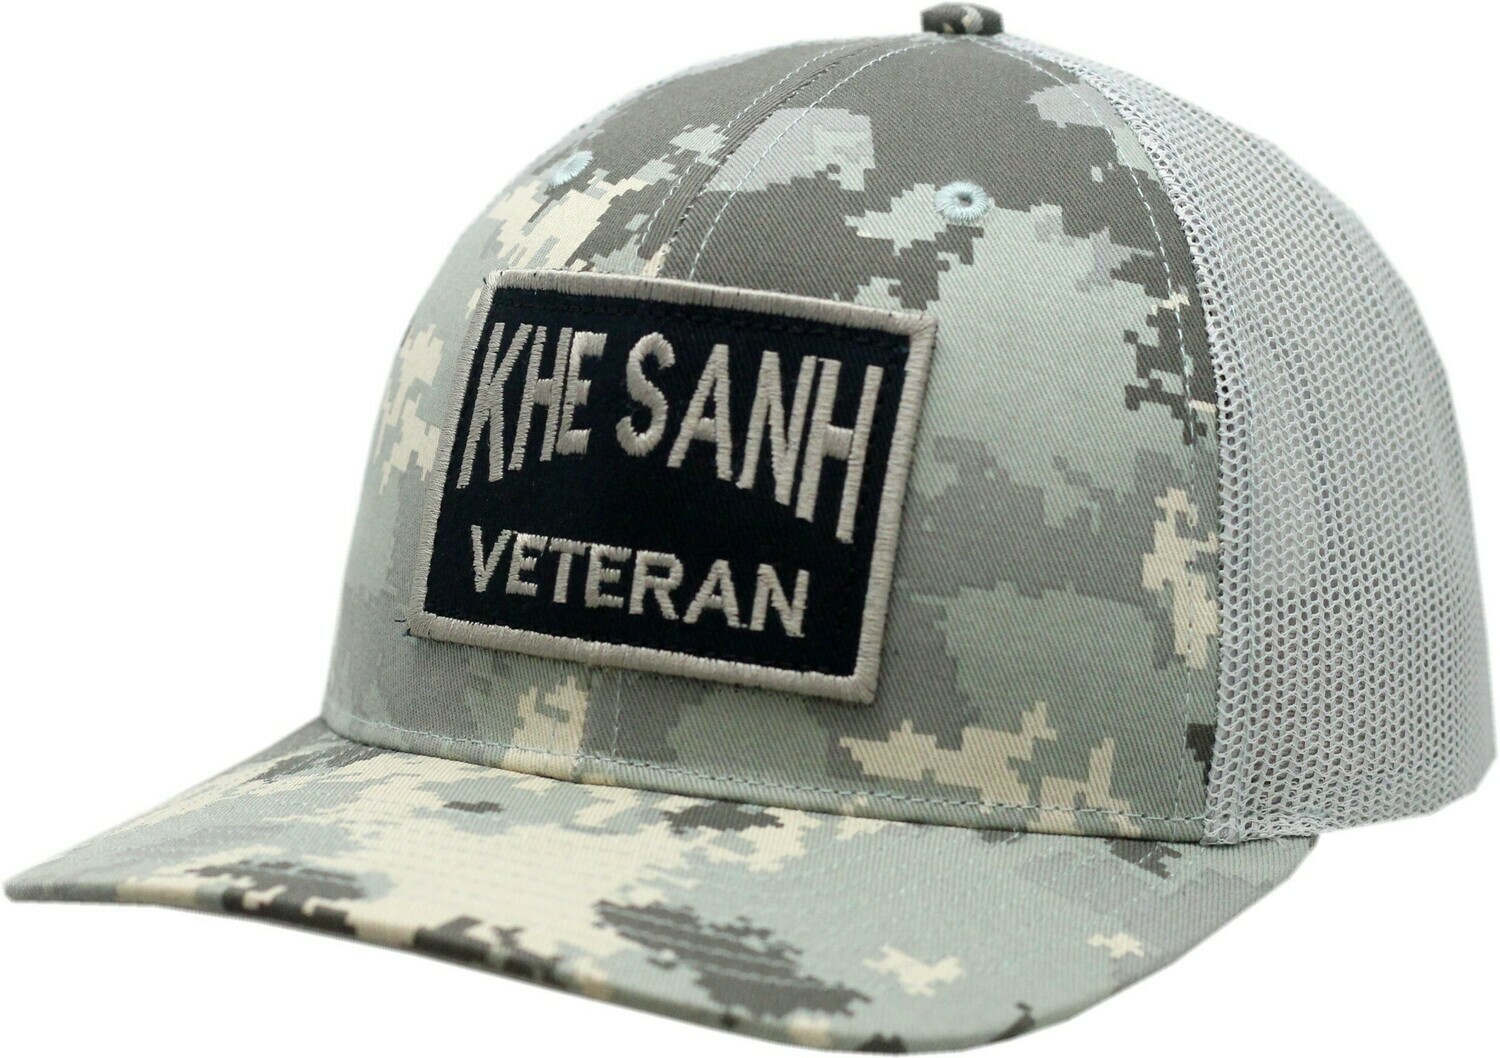 Khe Sanh Veteran Snapback Trucker Mesh Digi Grey Camouflage